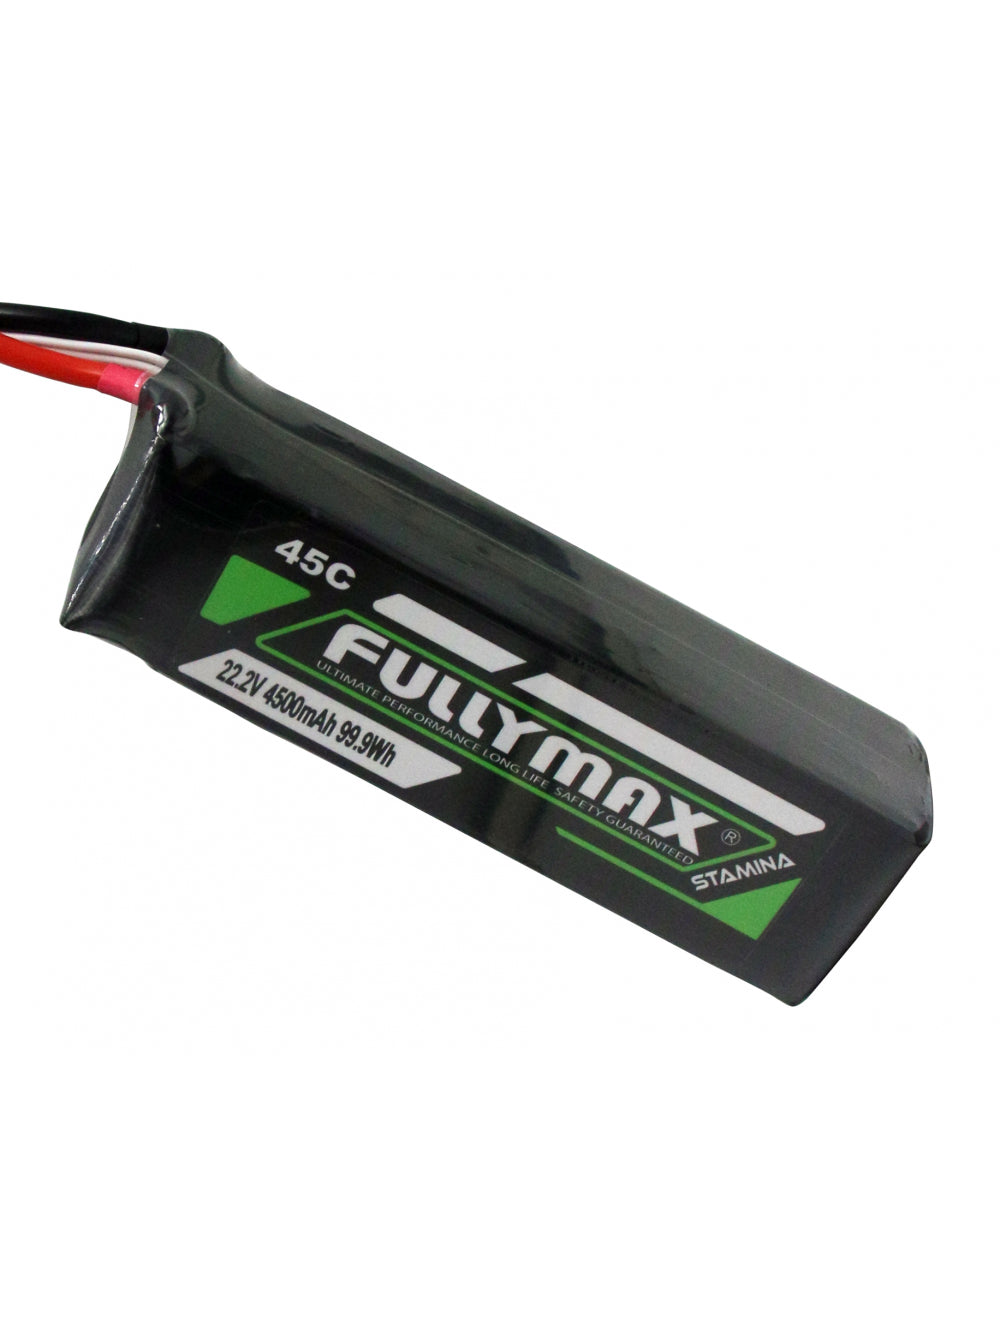 Overlander Fullymax 4500mAh 22.2V 6S 45C LiPo Battery - XT90 Anti Spark Connector 3446